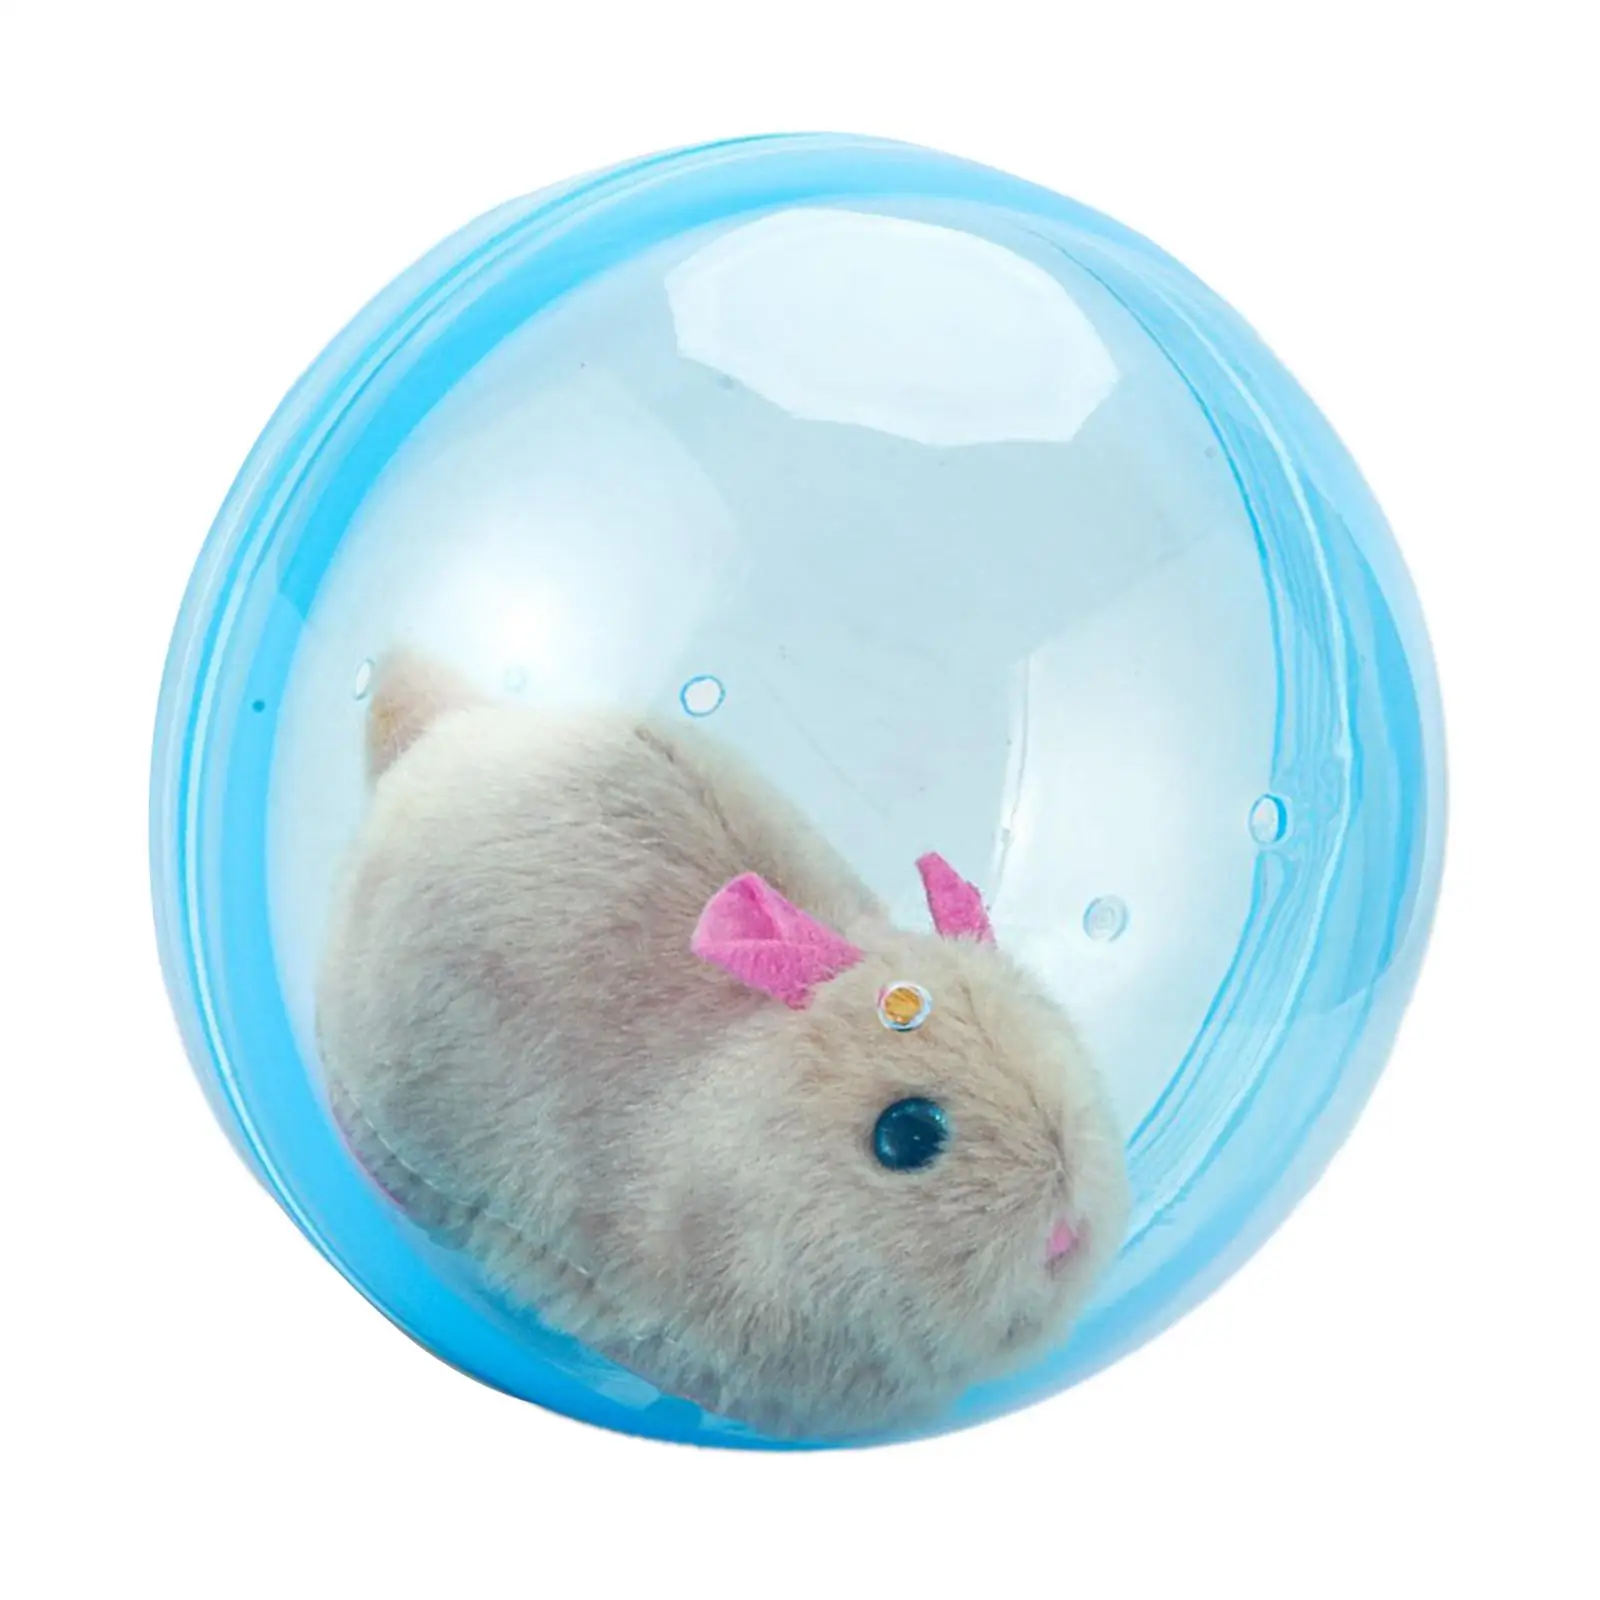 Ball Toys Plush Animals Toys Enjoy Fun for Kids Boys Children Girls Birthday Gifts